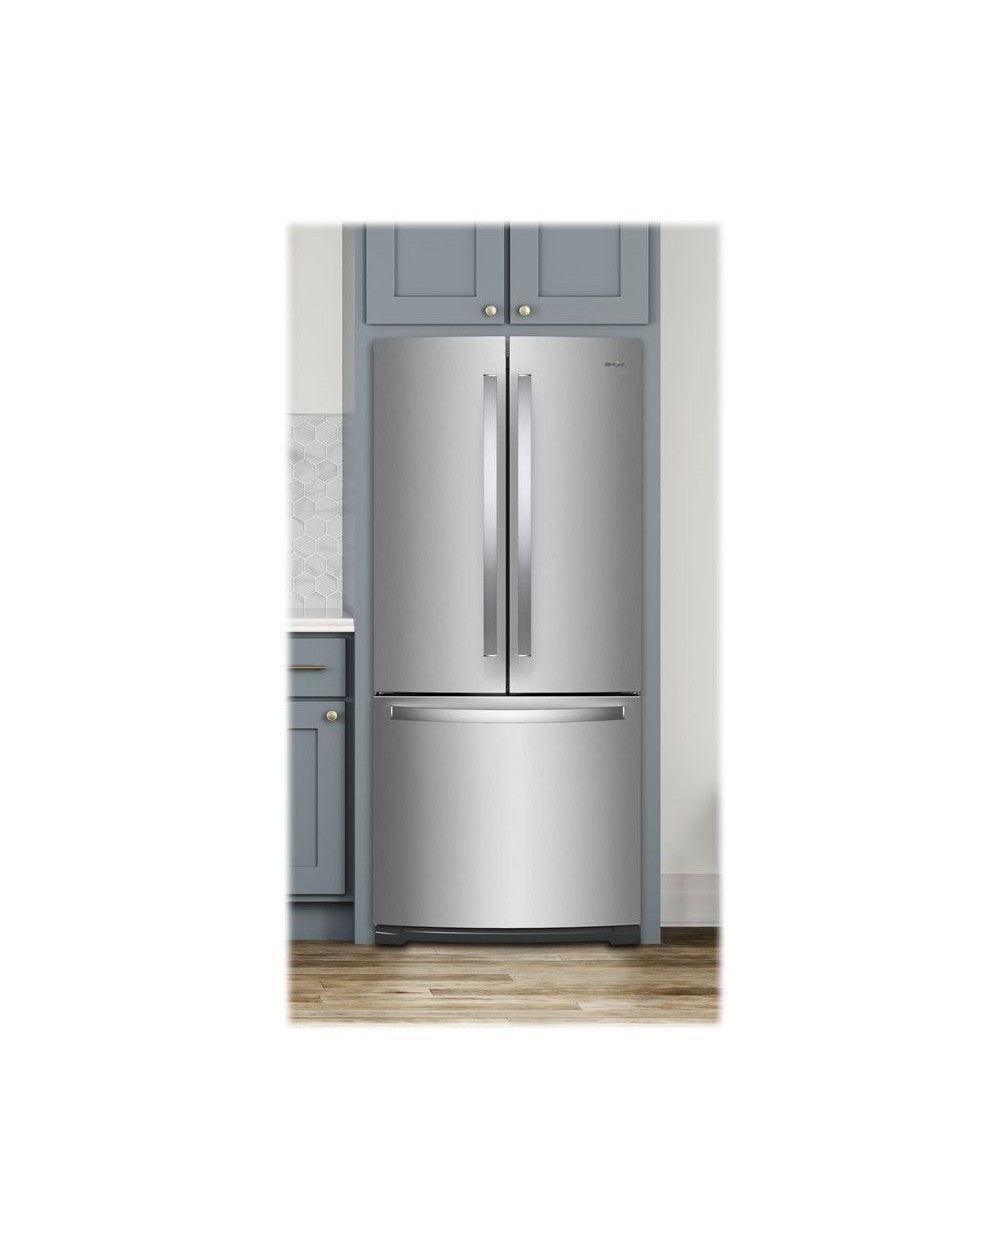 WHIRLPOOL WRF560SMHZ 30-inch Wide French Door Refrigerator - 20 cu. ft